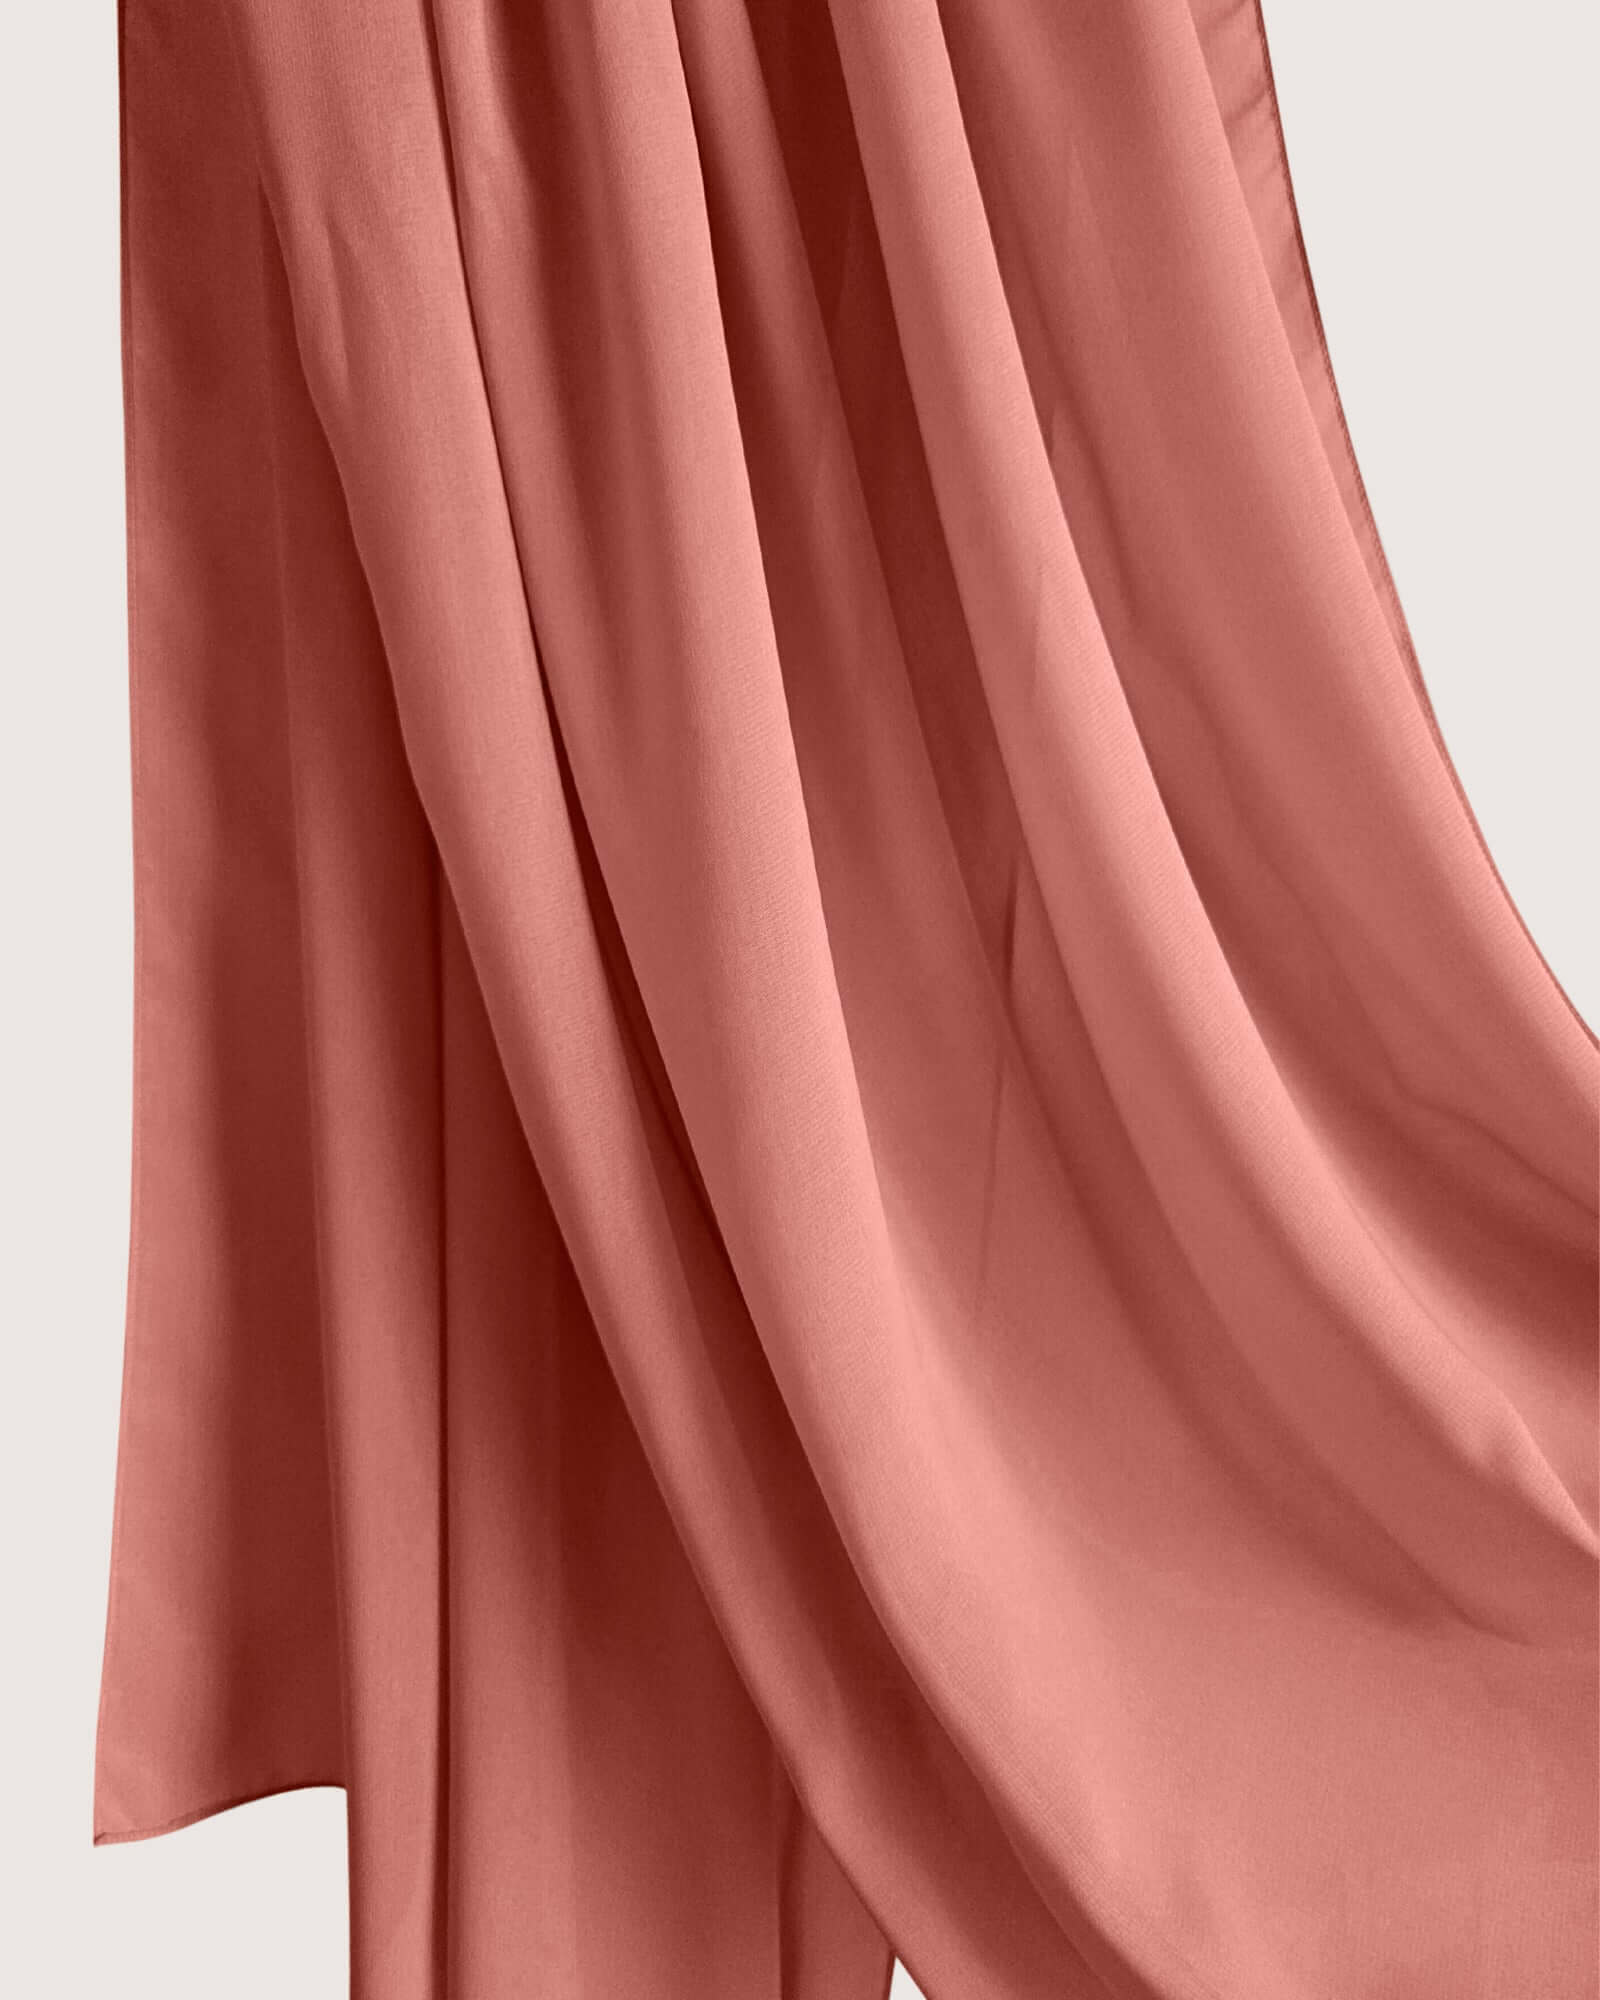 Premium Salmon Pink Chiffon Hijab Scarf